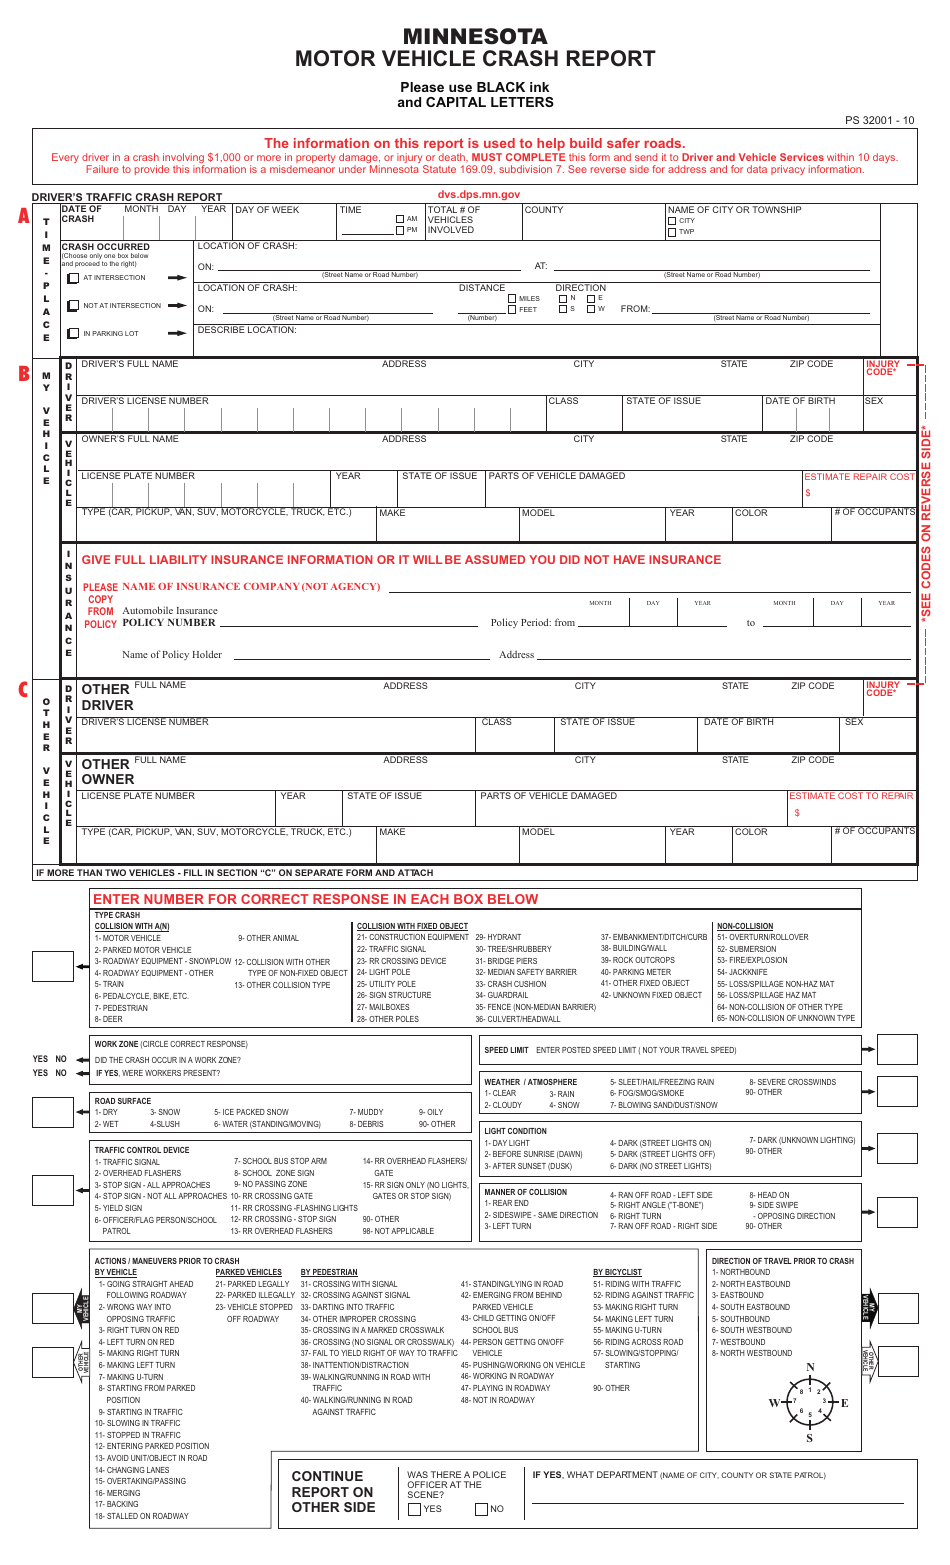 Form PS33201 Motor Vehicle Crash Report - Minnesota, Page 1